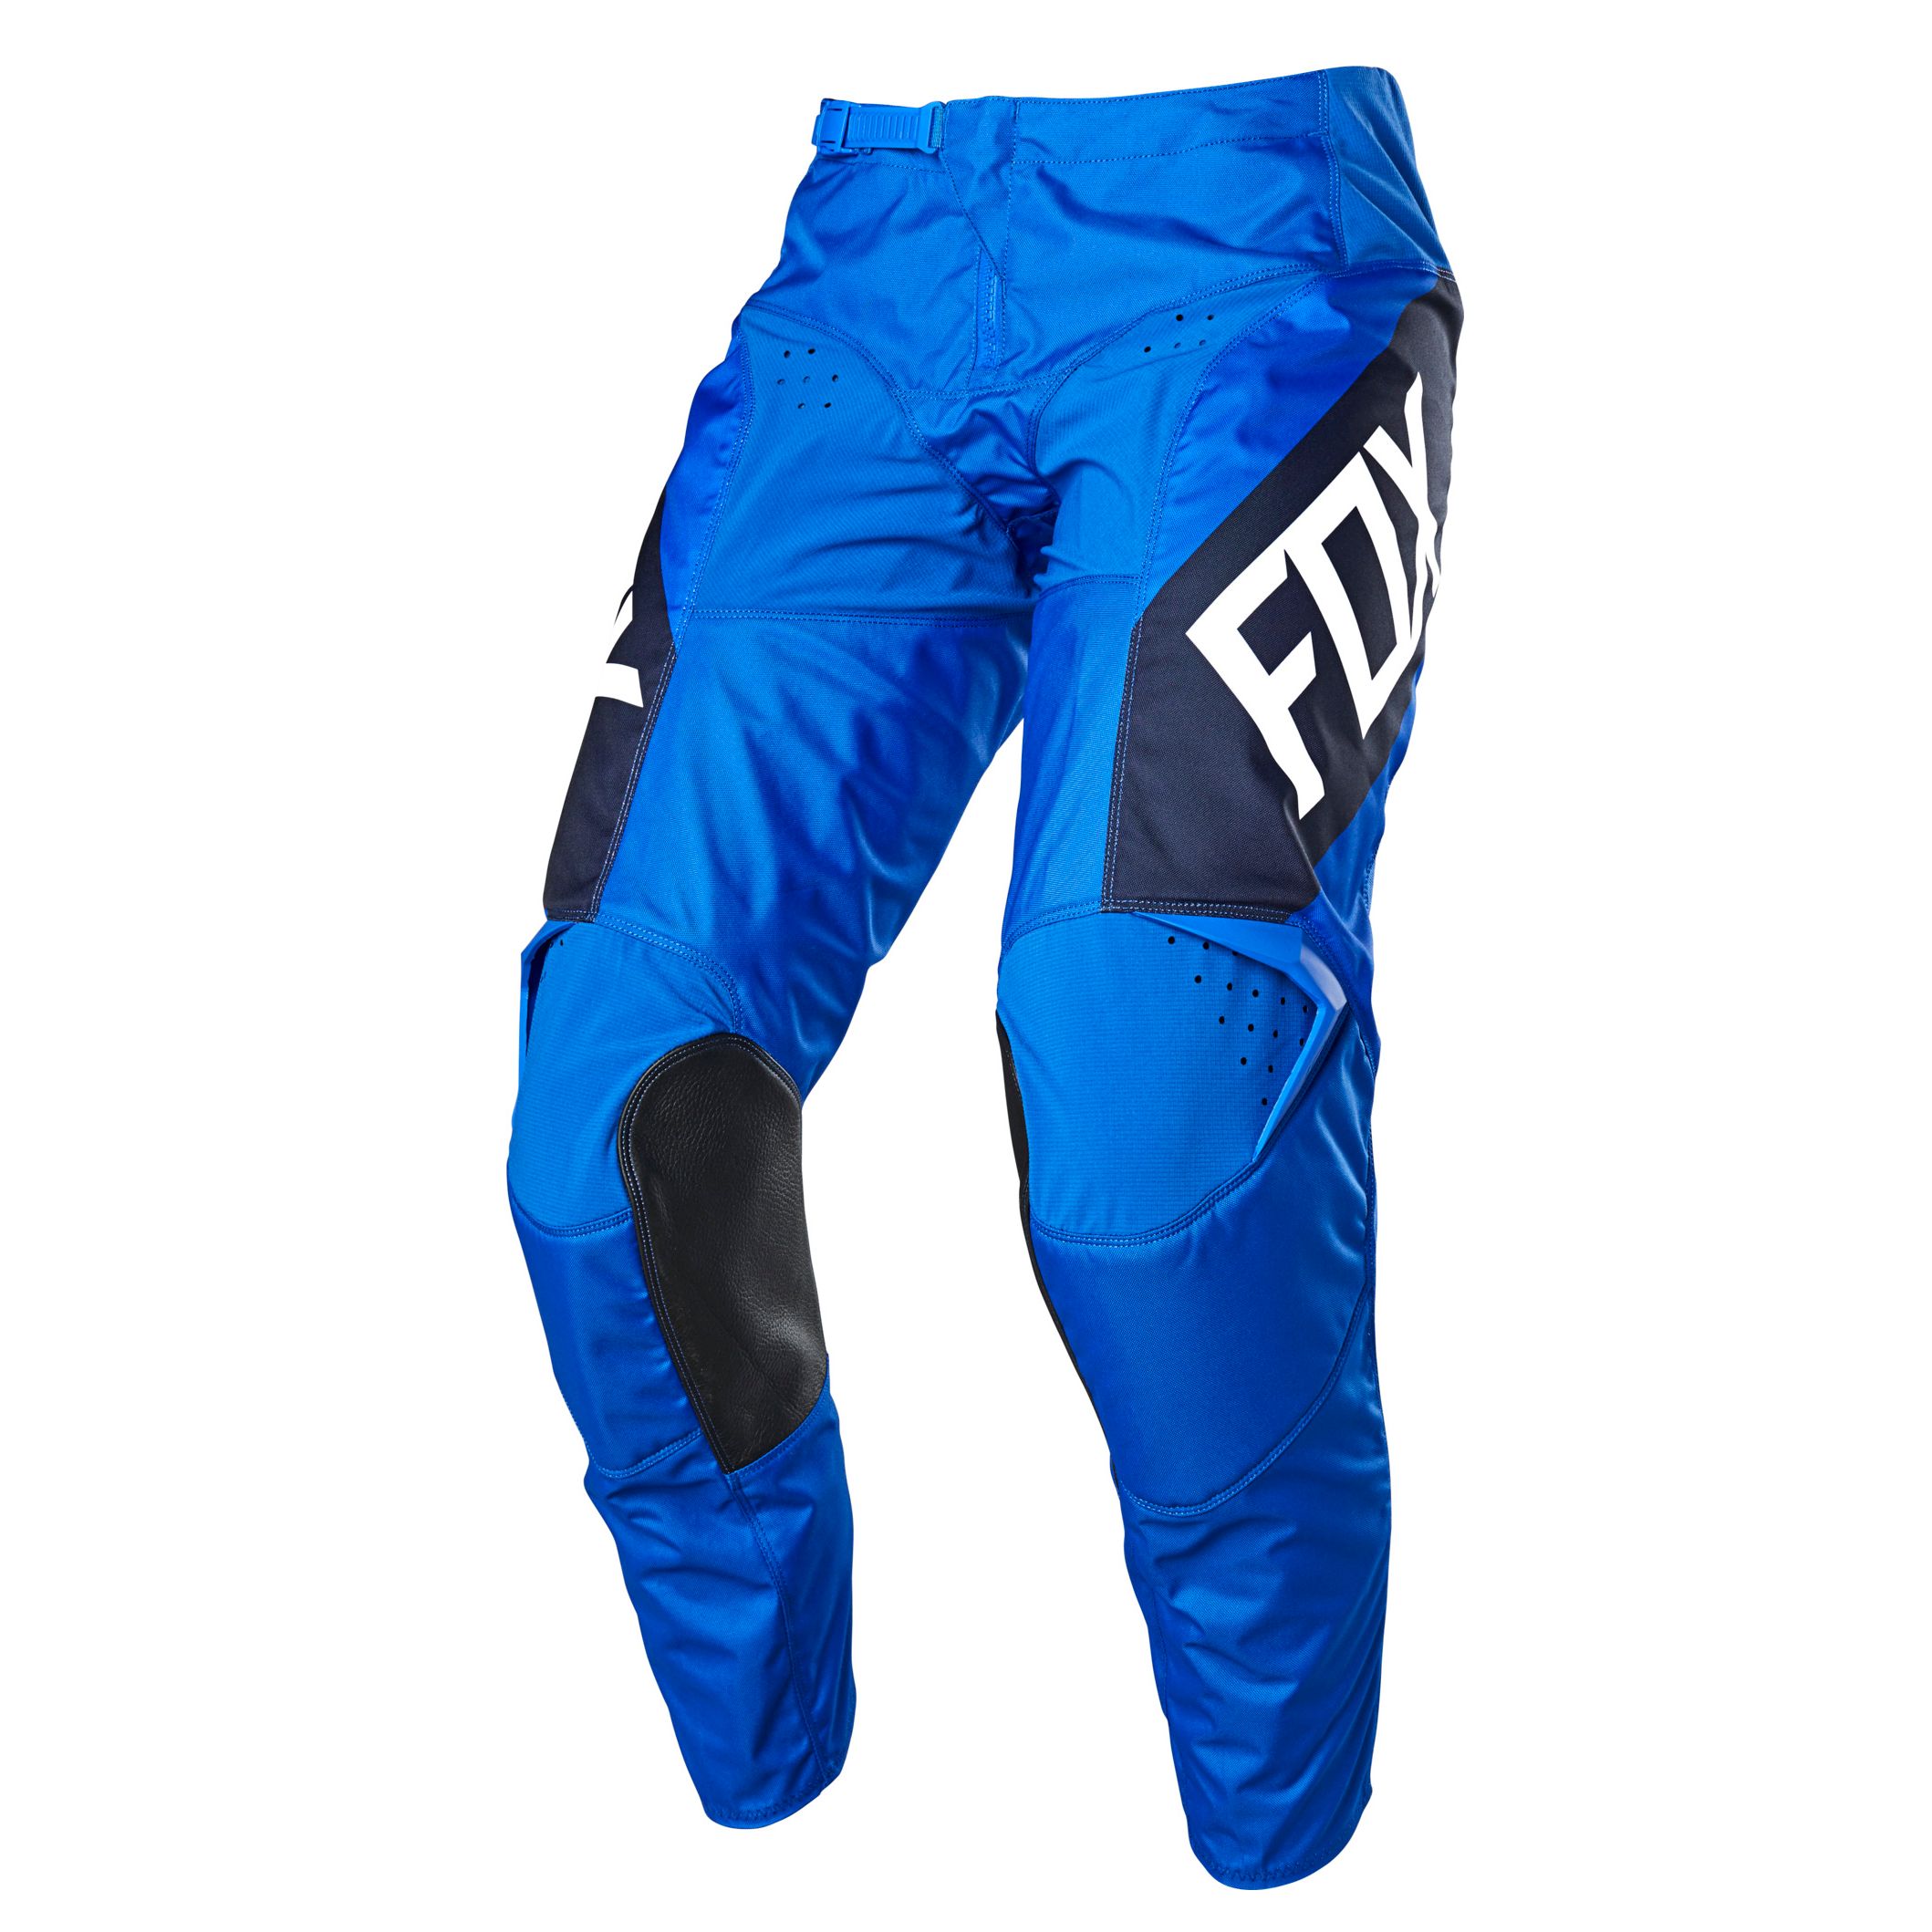 Pantalon cross Fox 180 - REVN - BLUE 2021 - Motoblouz.com